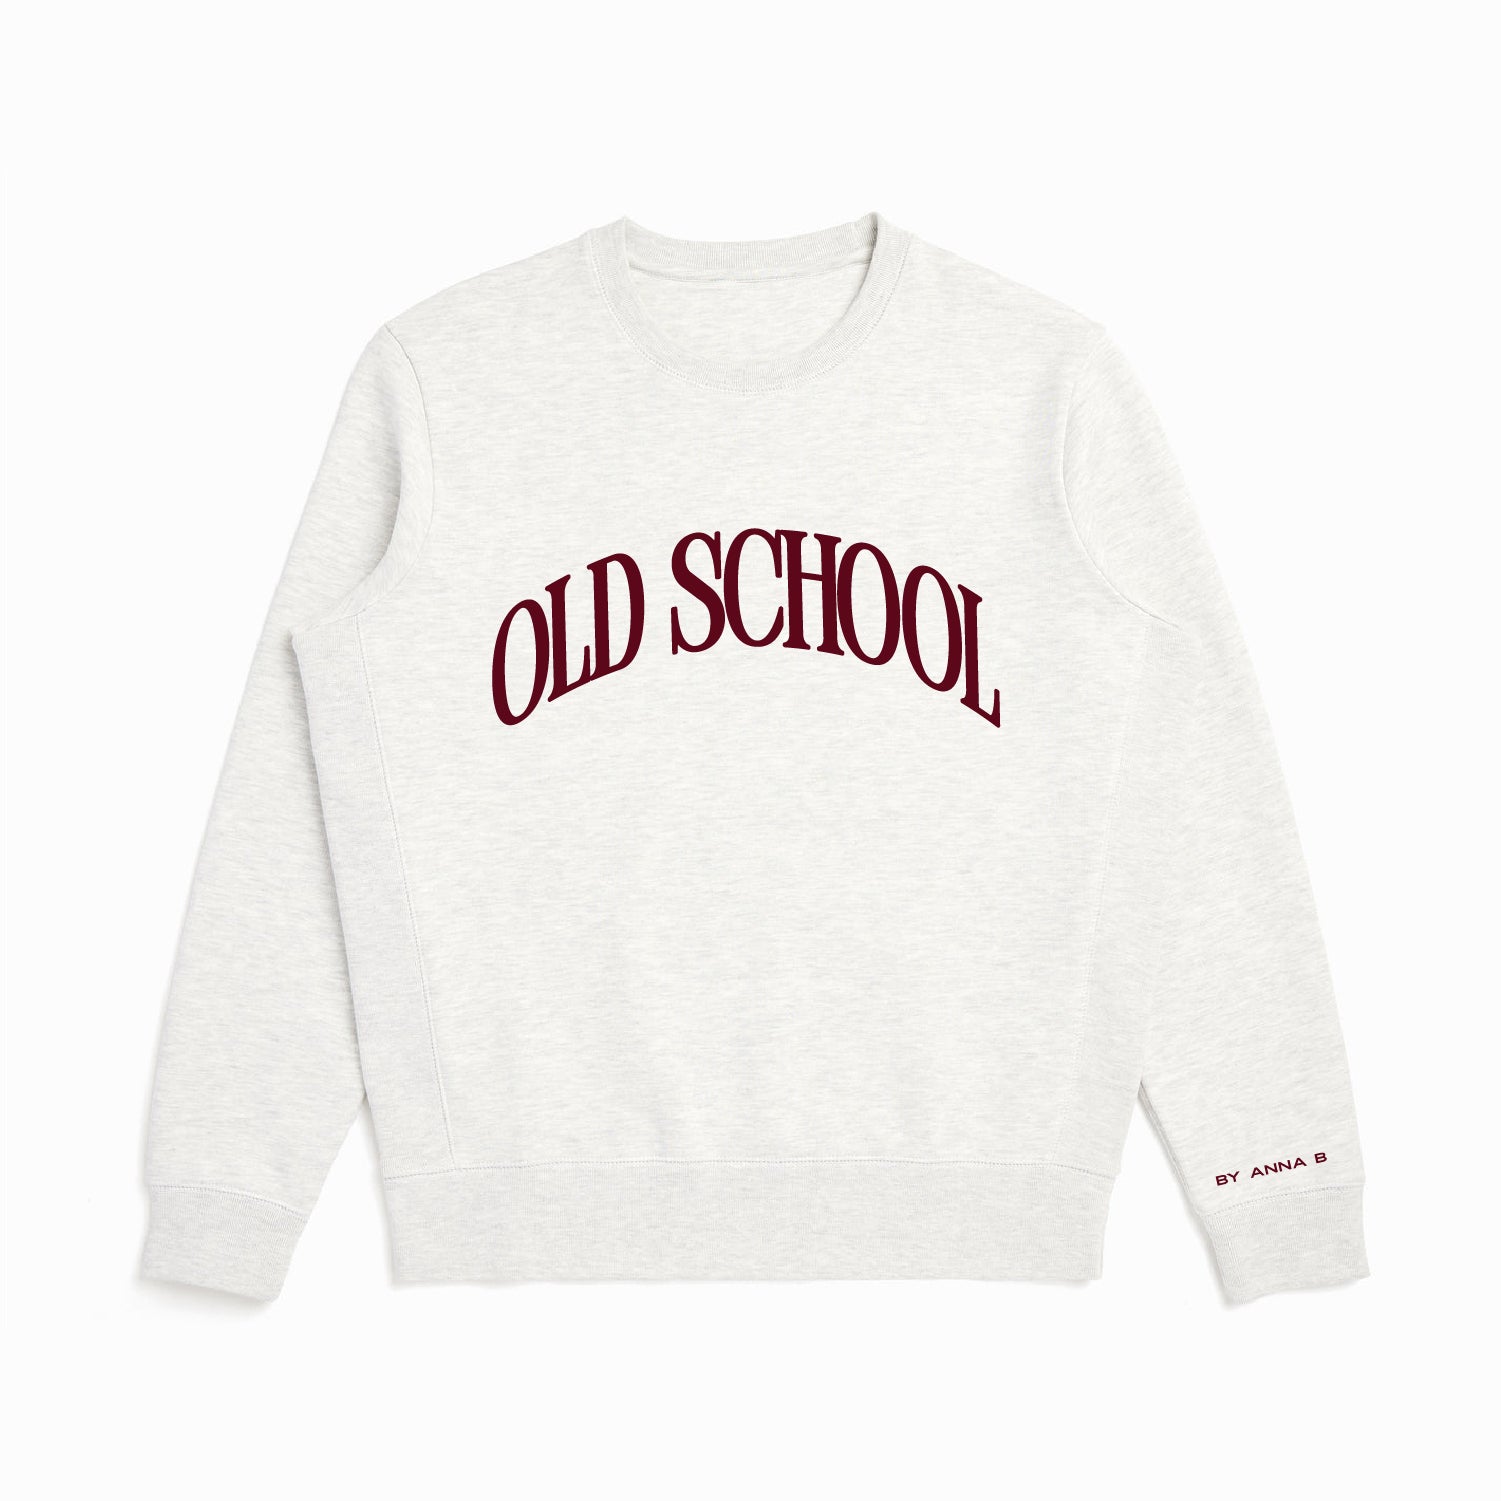 Old School Cotton Sweatshirt